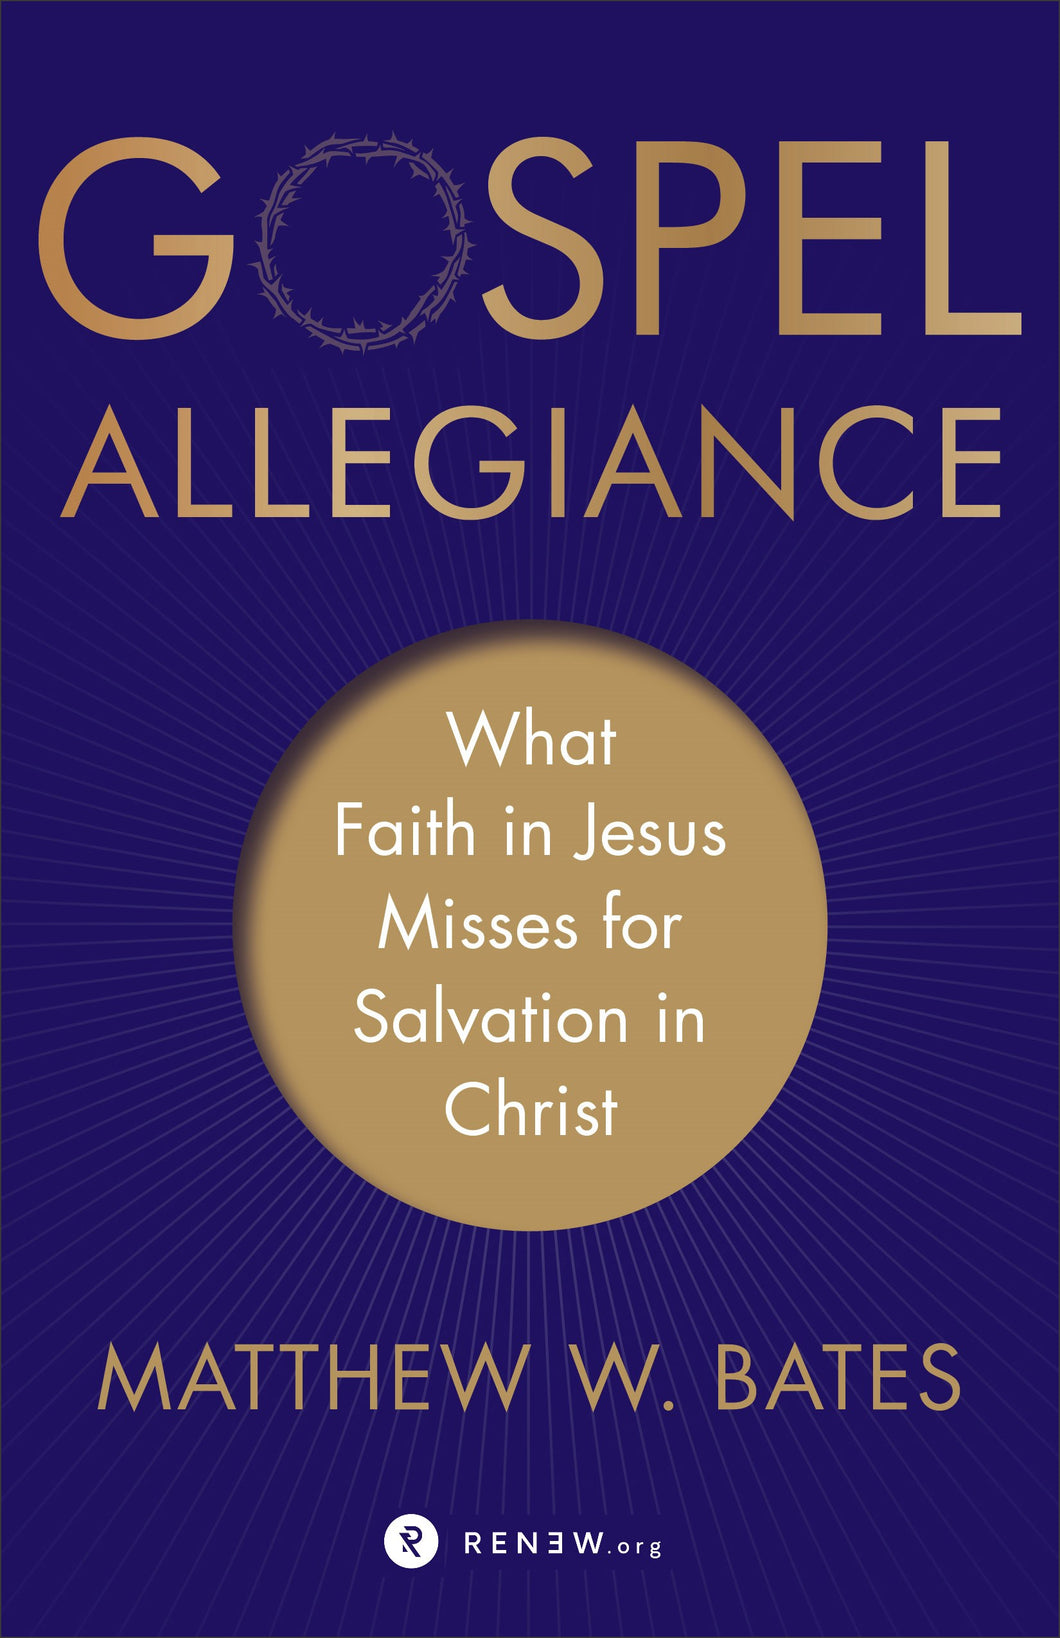 Gospel Allegiance